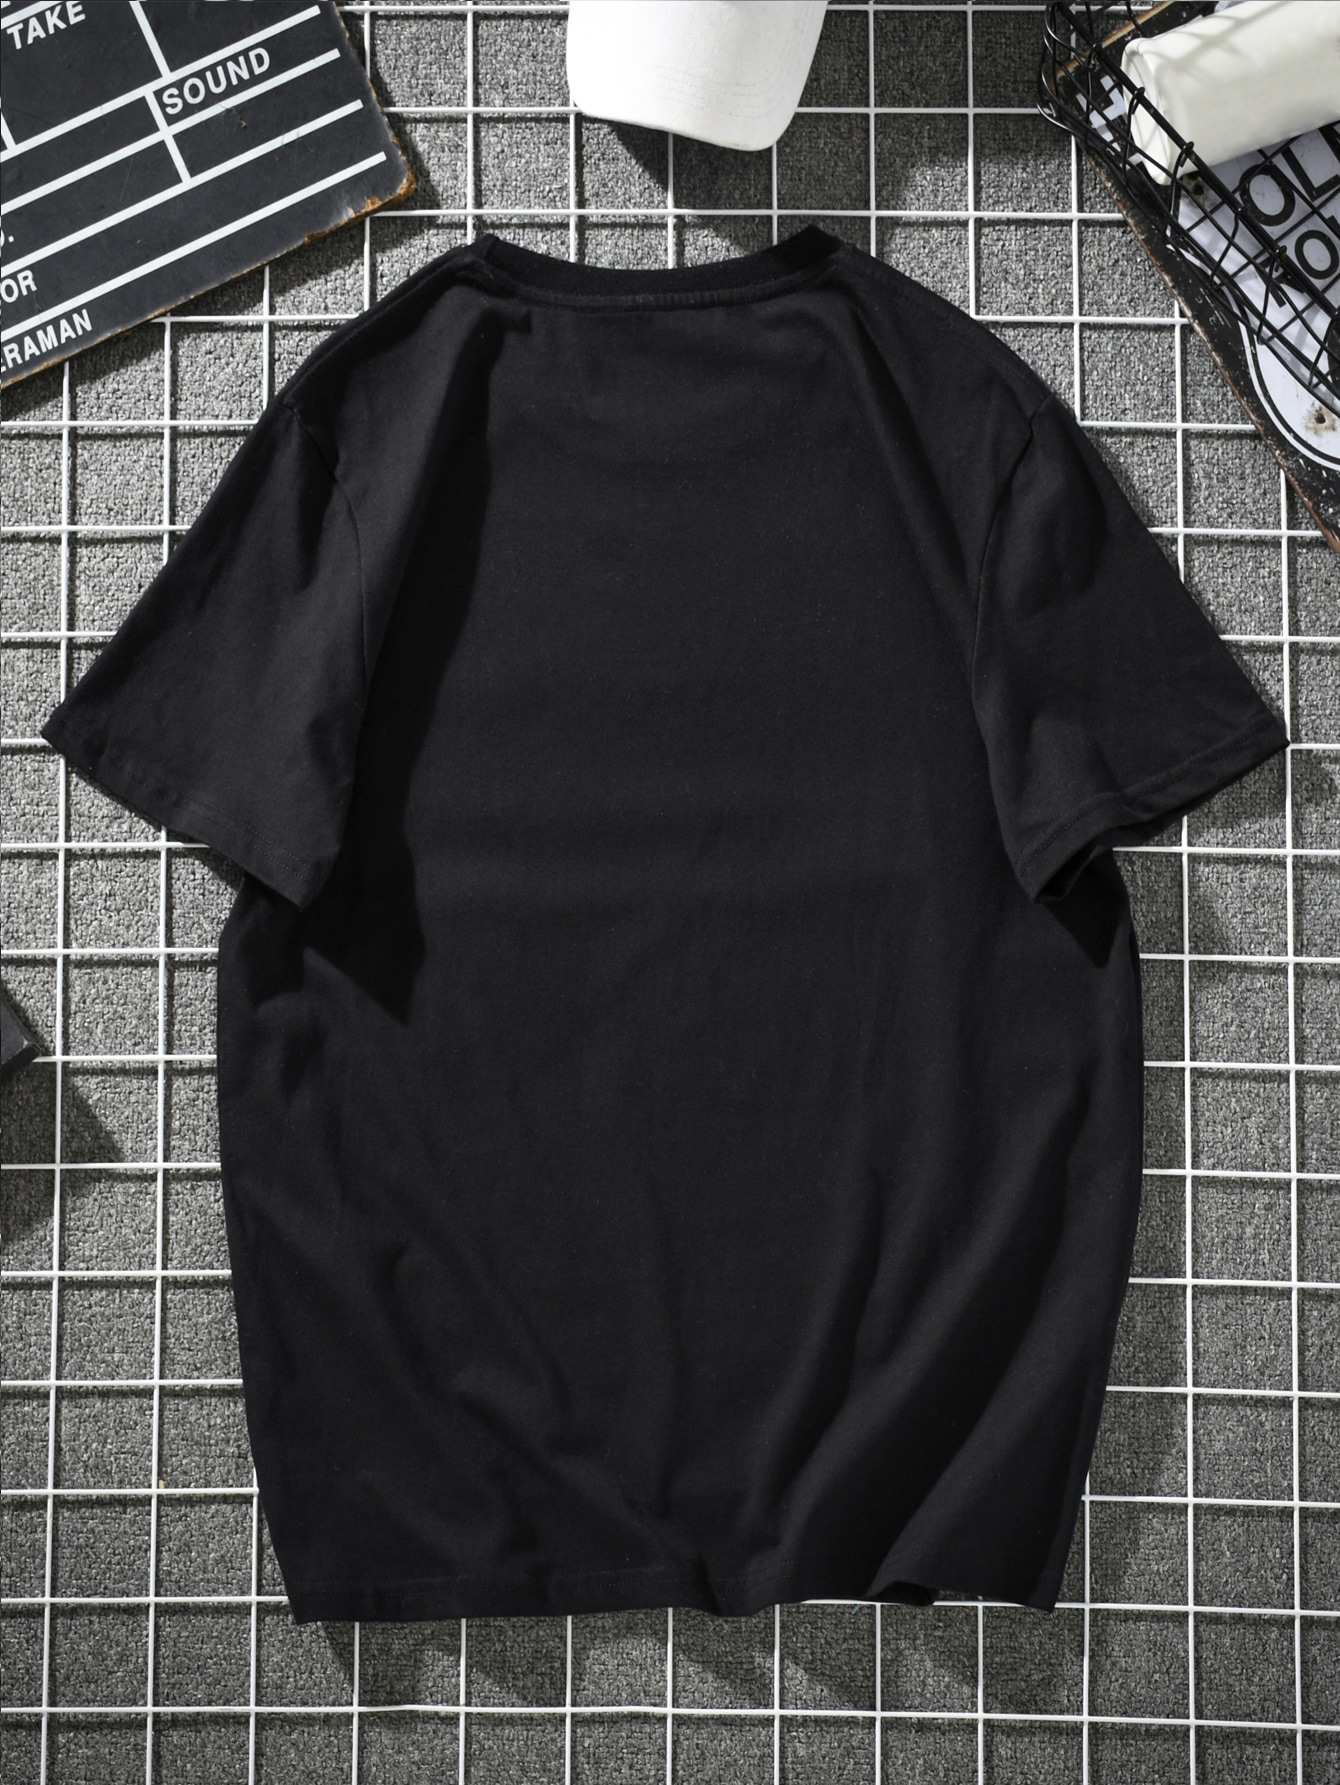 Contrast Lace Notched Neck PJ Set Size XL